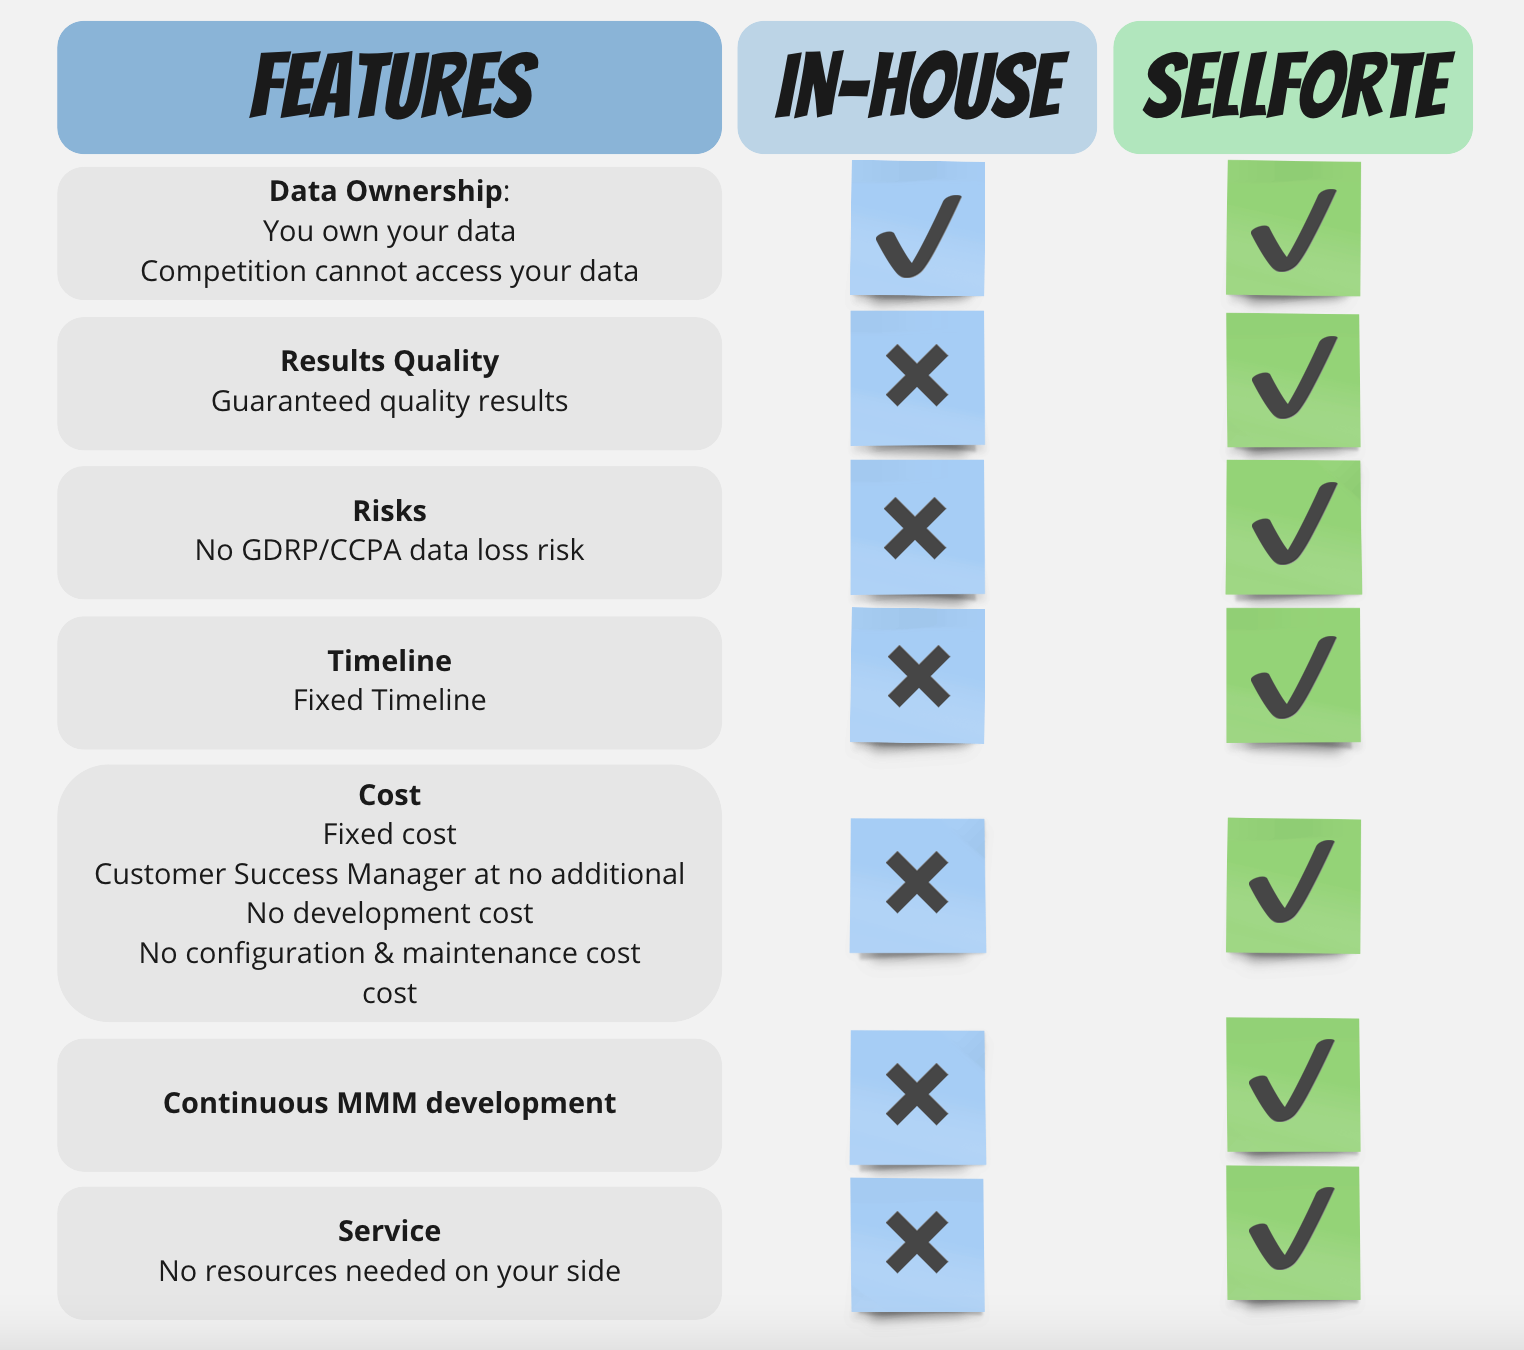 Build or Buy? In-house MMM solution vs Sellforte